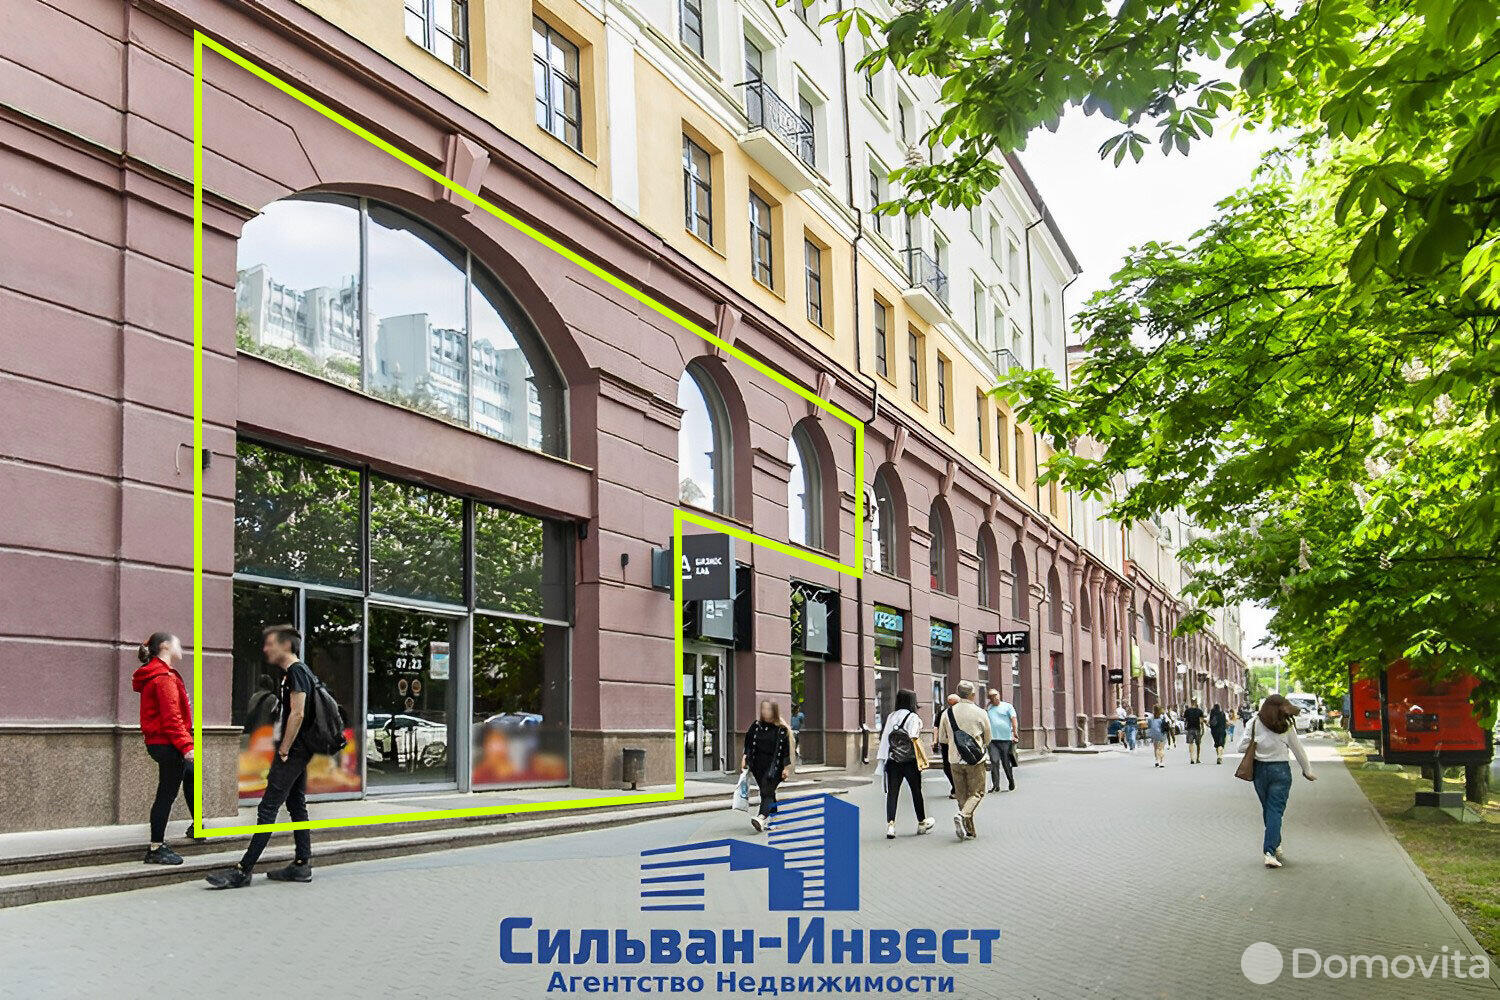 Аренда торговой точки на ул. Немига, д. 5 в Минске, 11325EUR - фото 3